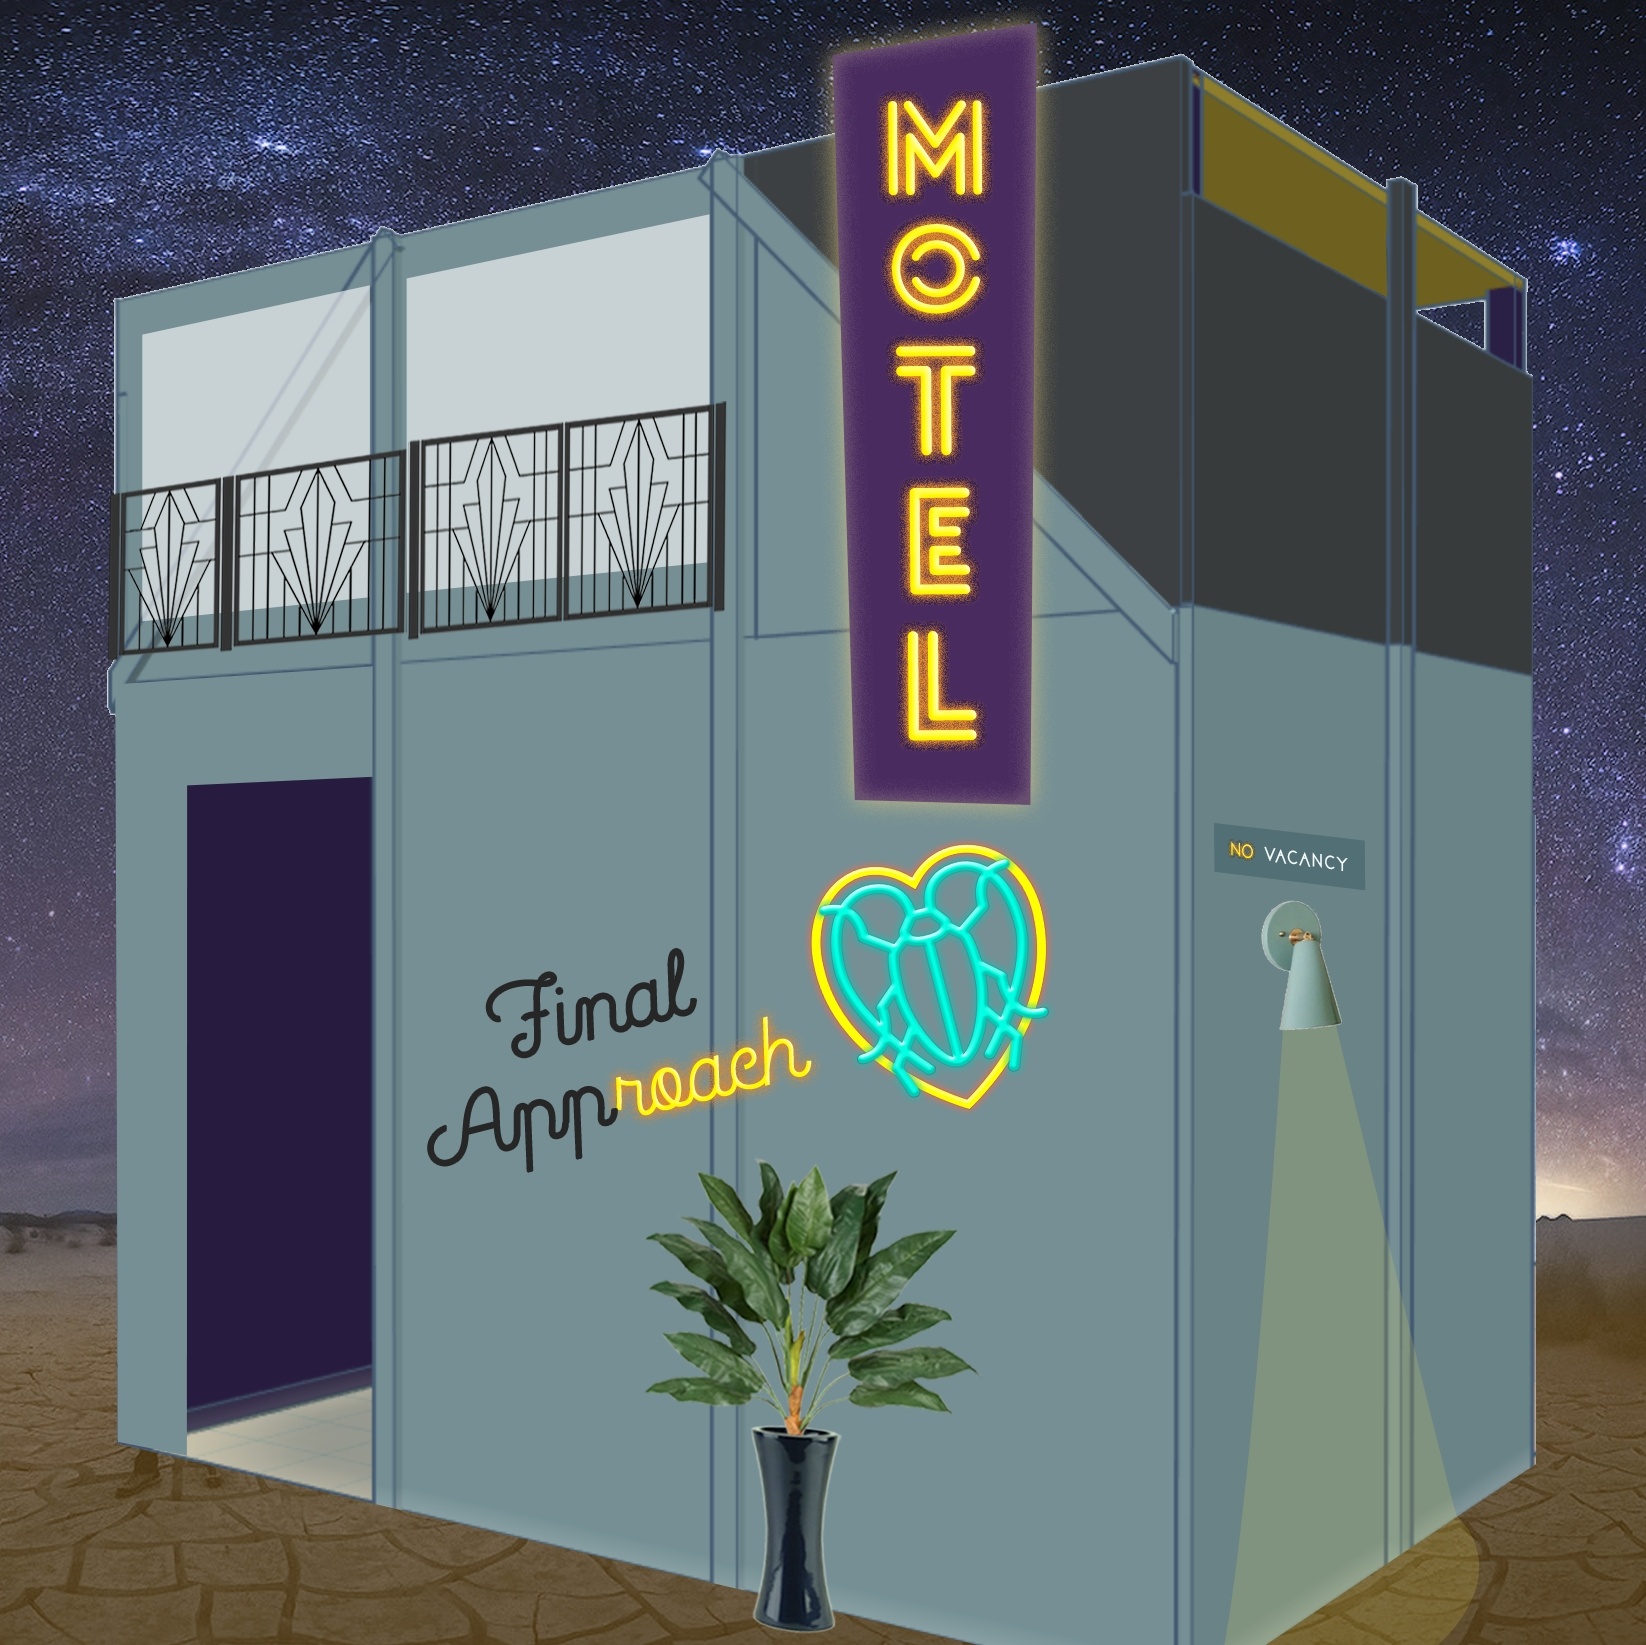 Final Approach Motel design rendering